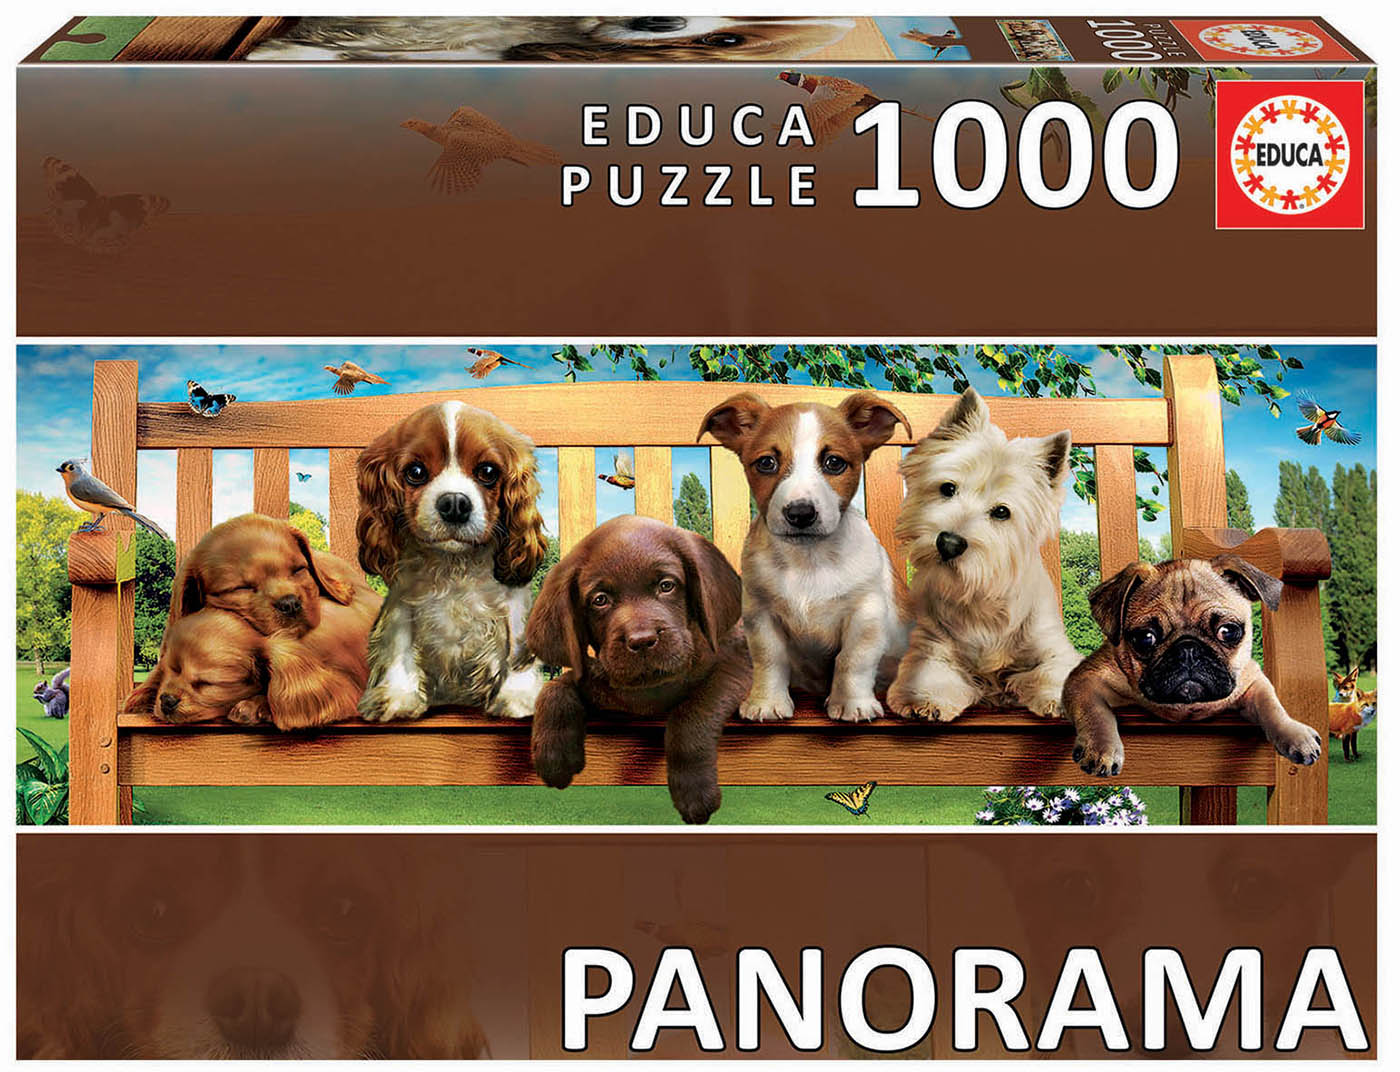 1000 Cachorros no Banco “Panorama”